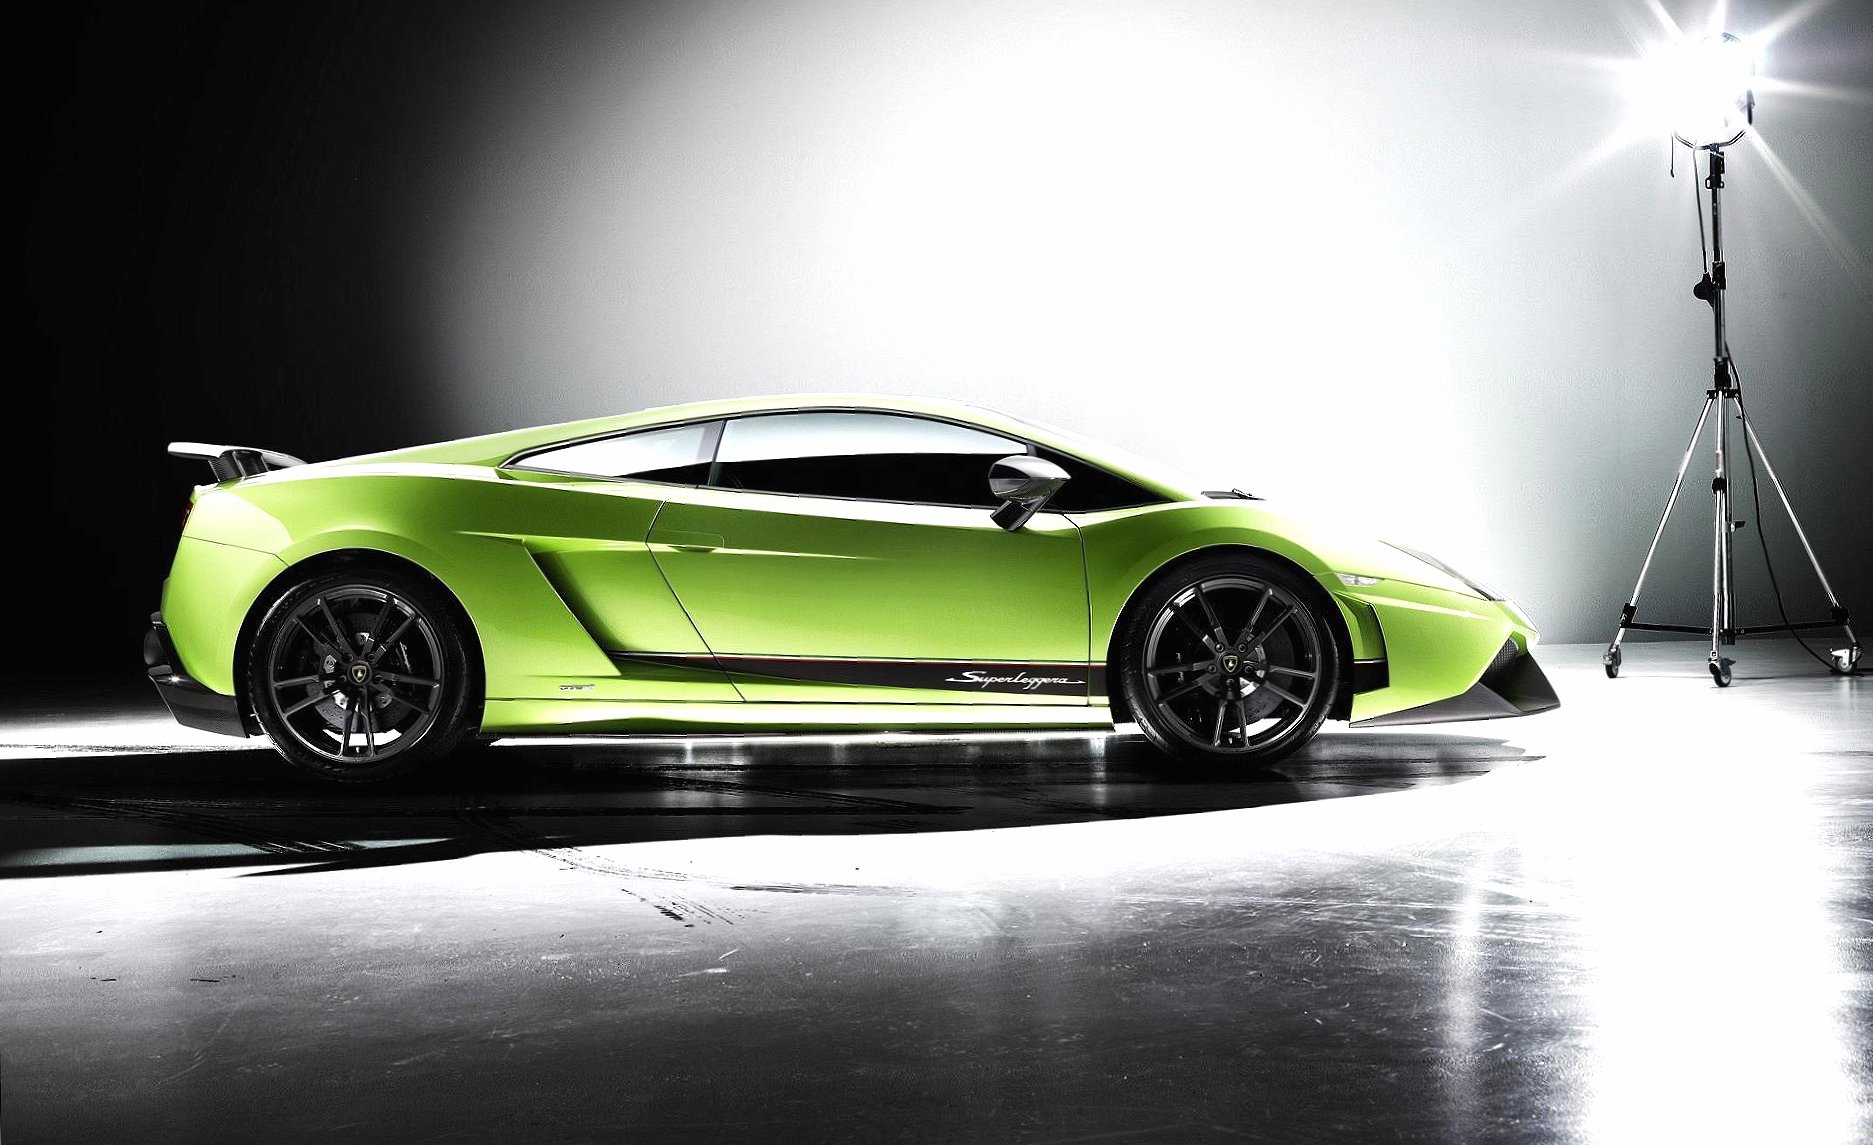 Lamborghini gallardo lp 570 4 superleggera at 750 x 1334 iPhone 6 size wallpapers HD quality